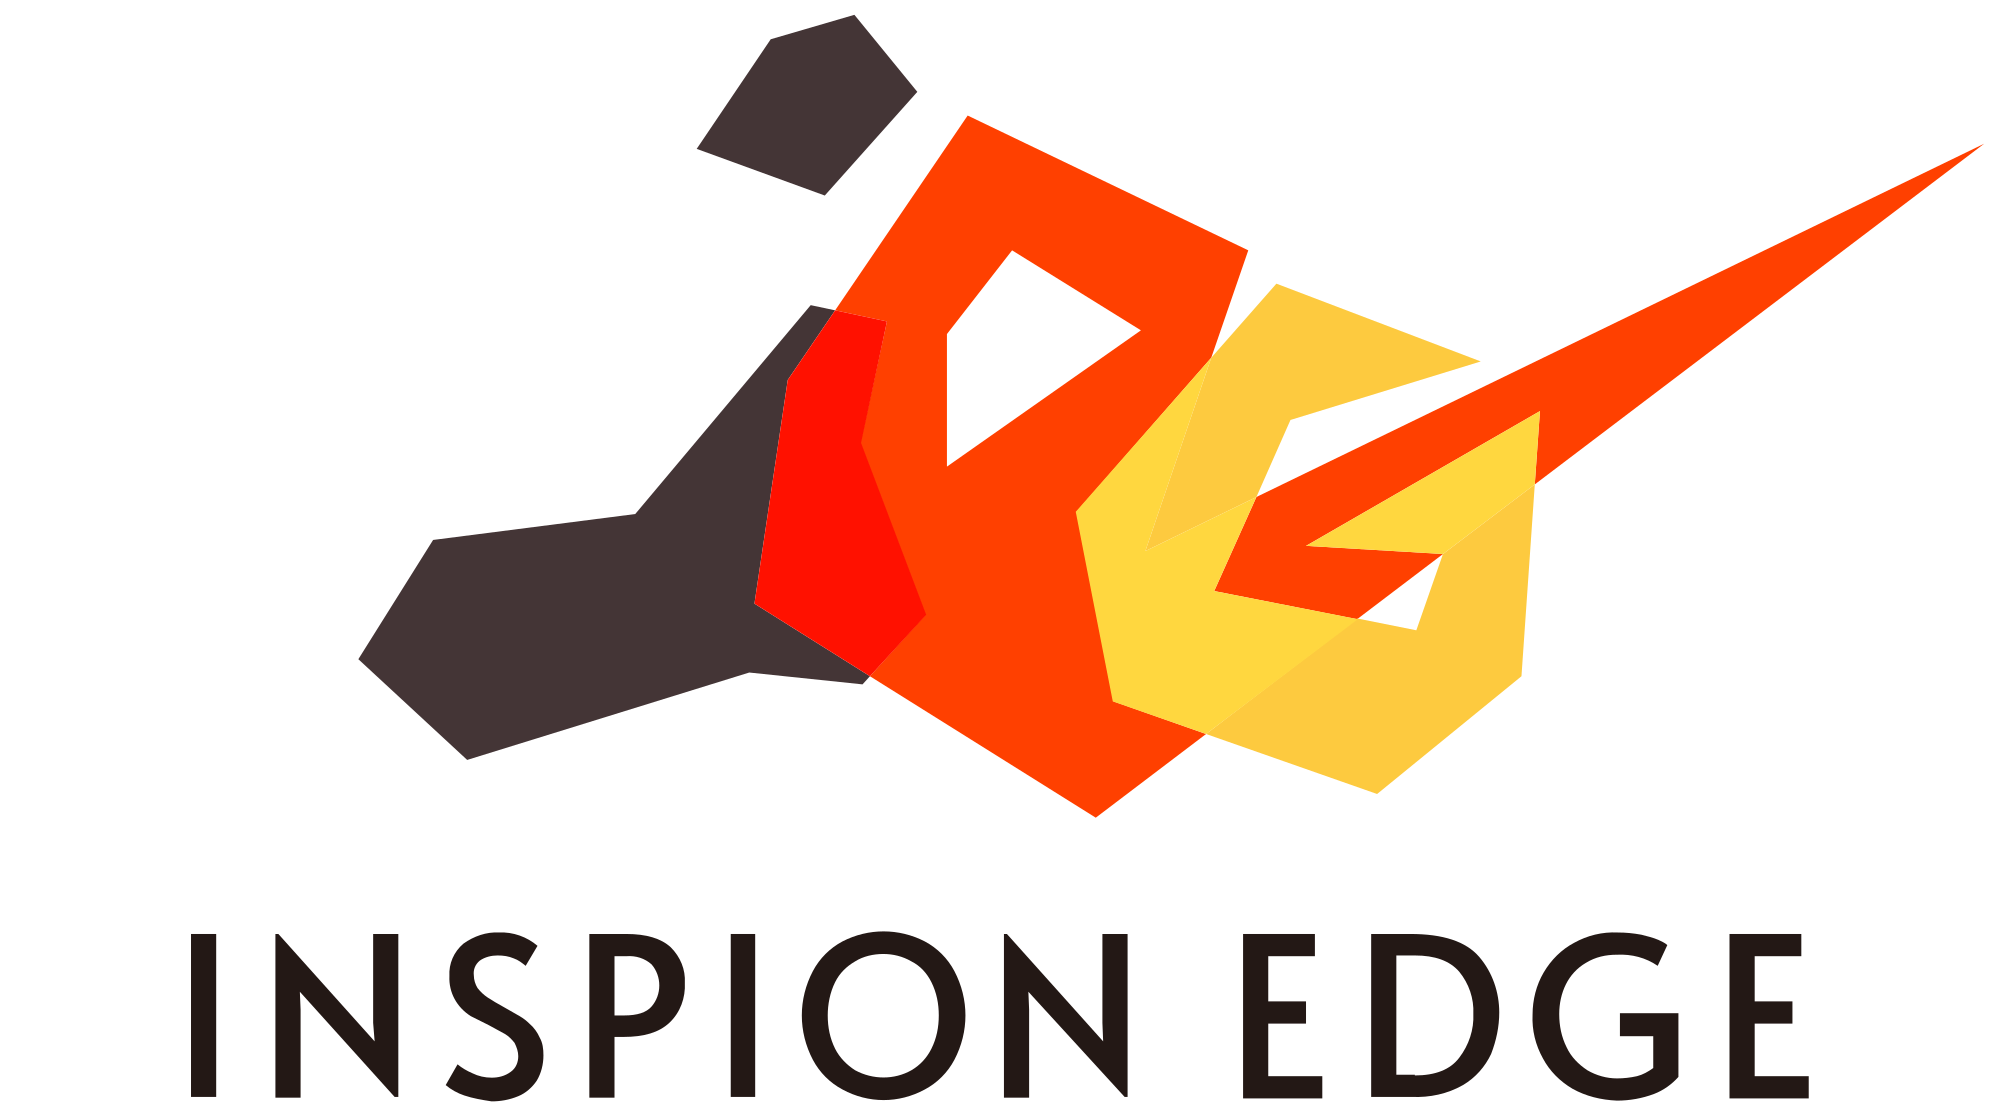 INSPION EDGE - company